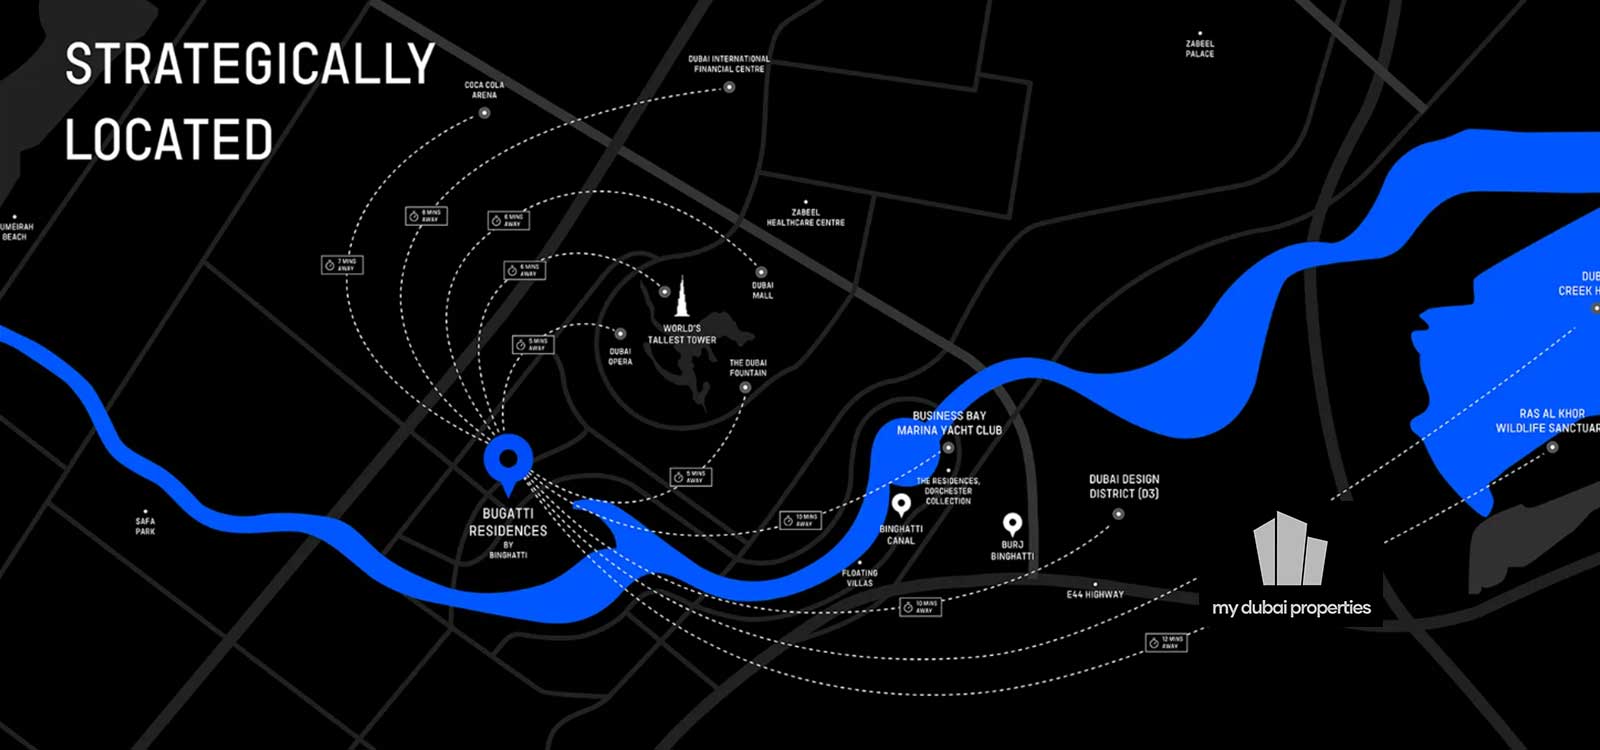 Bugatti Residences Location Map